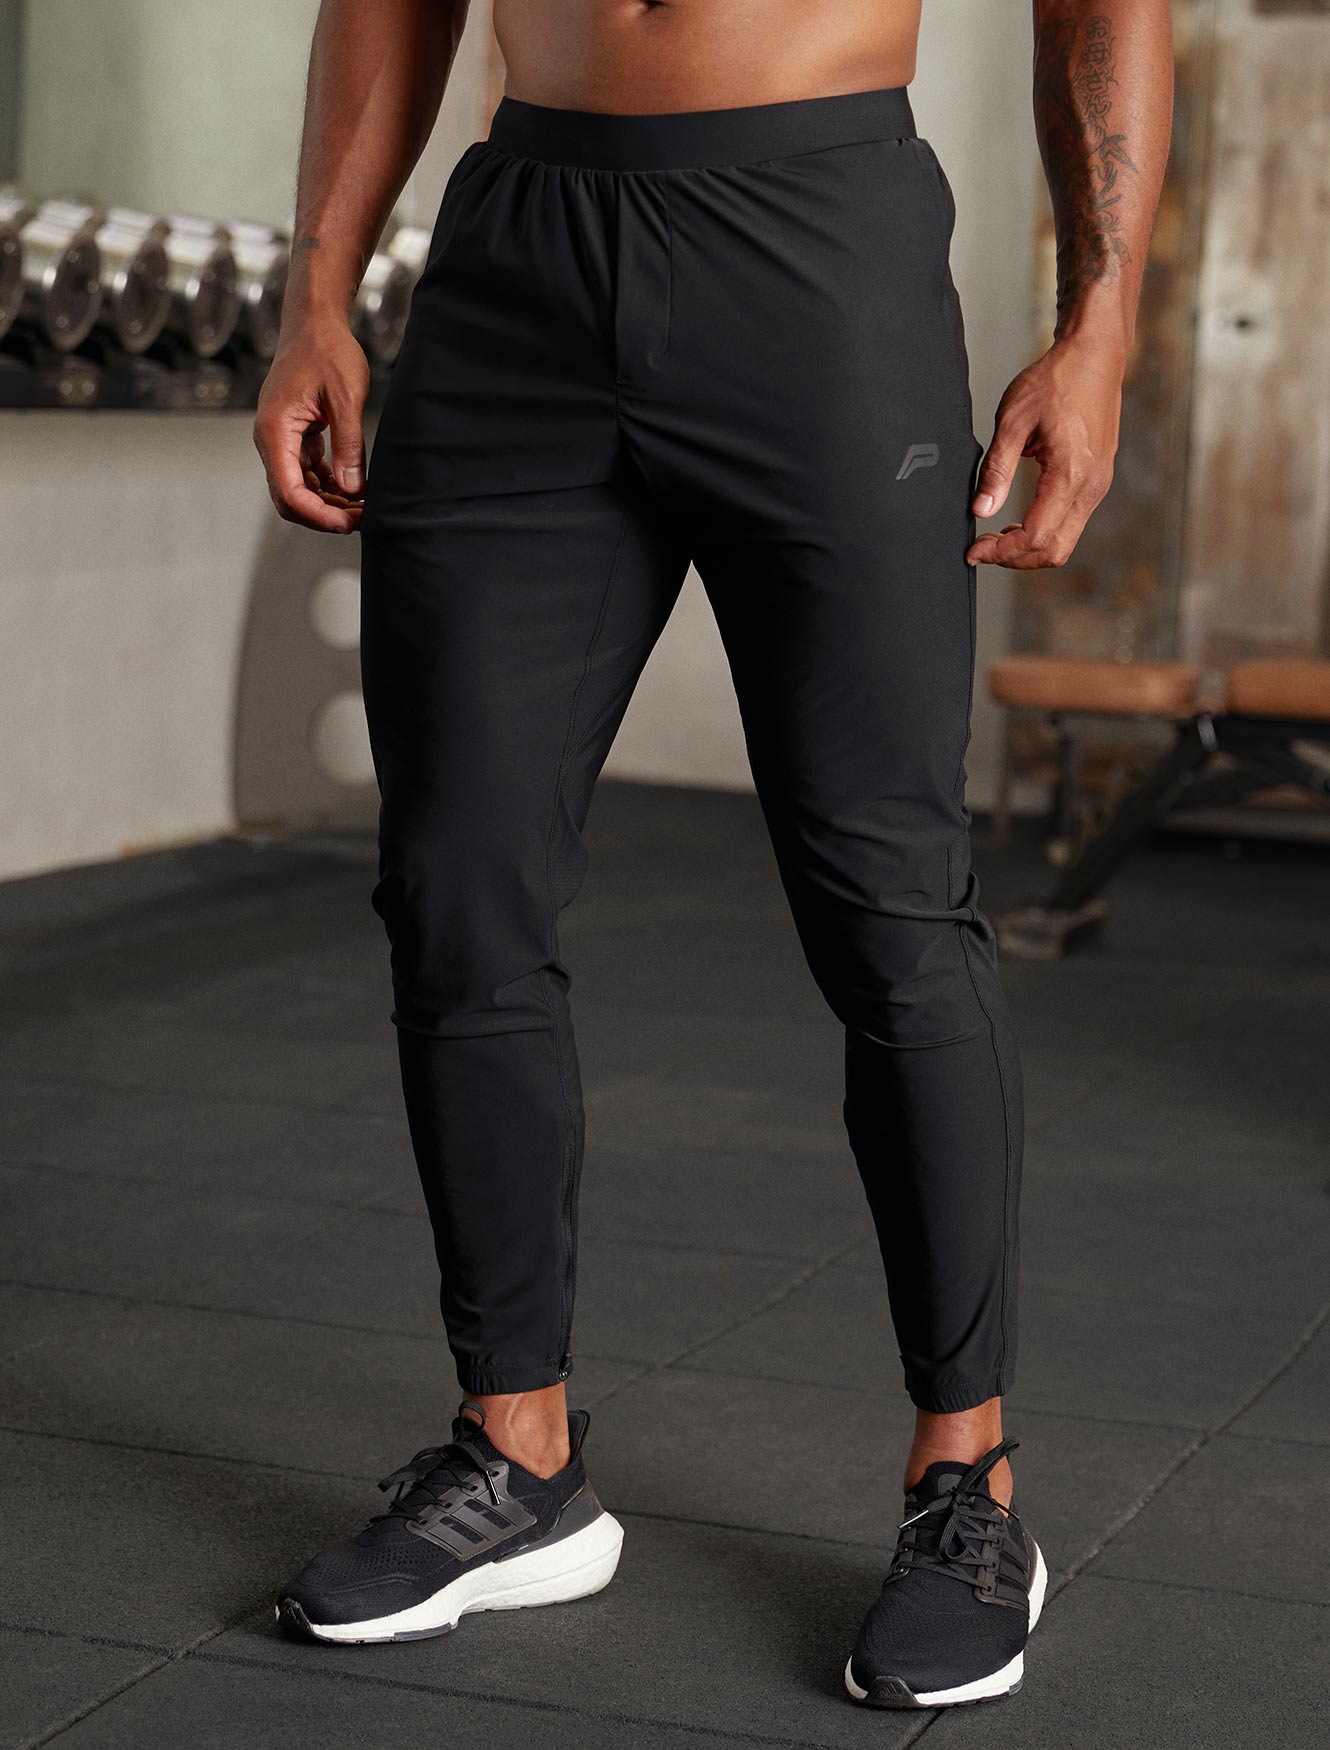 Men's Quick-drying Activewear Workout Suit Sports Wear Set for Men, Dad,  Boyfriend, Husband -  UK